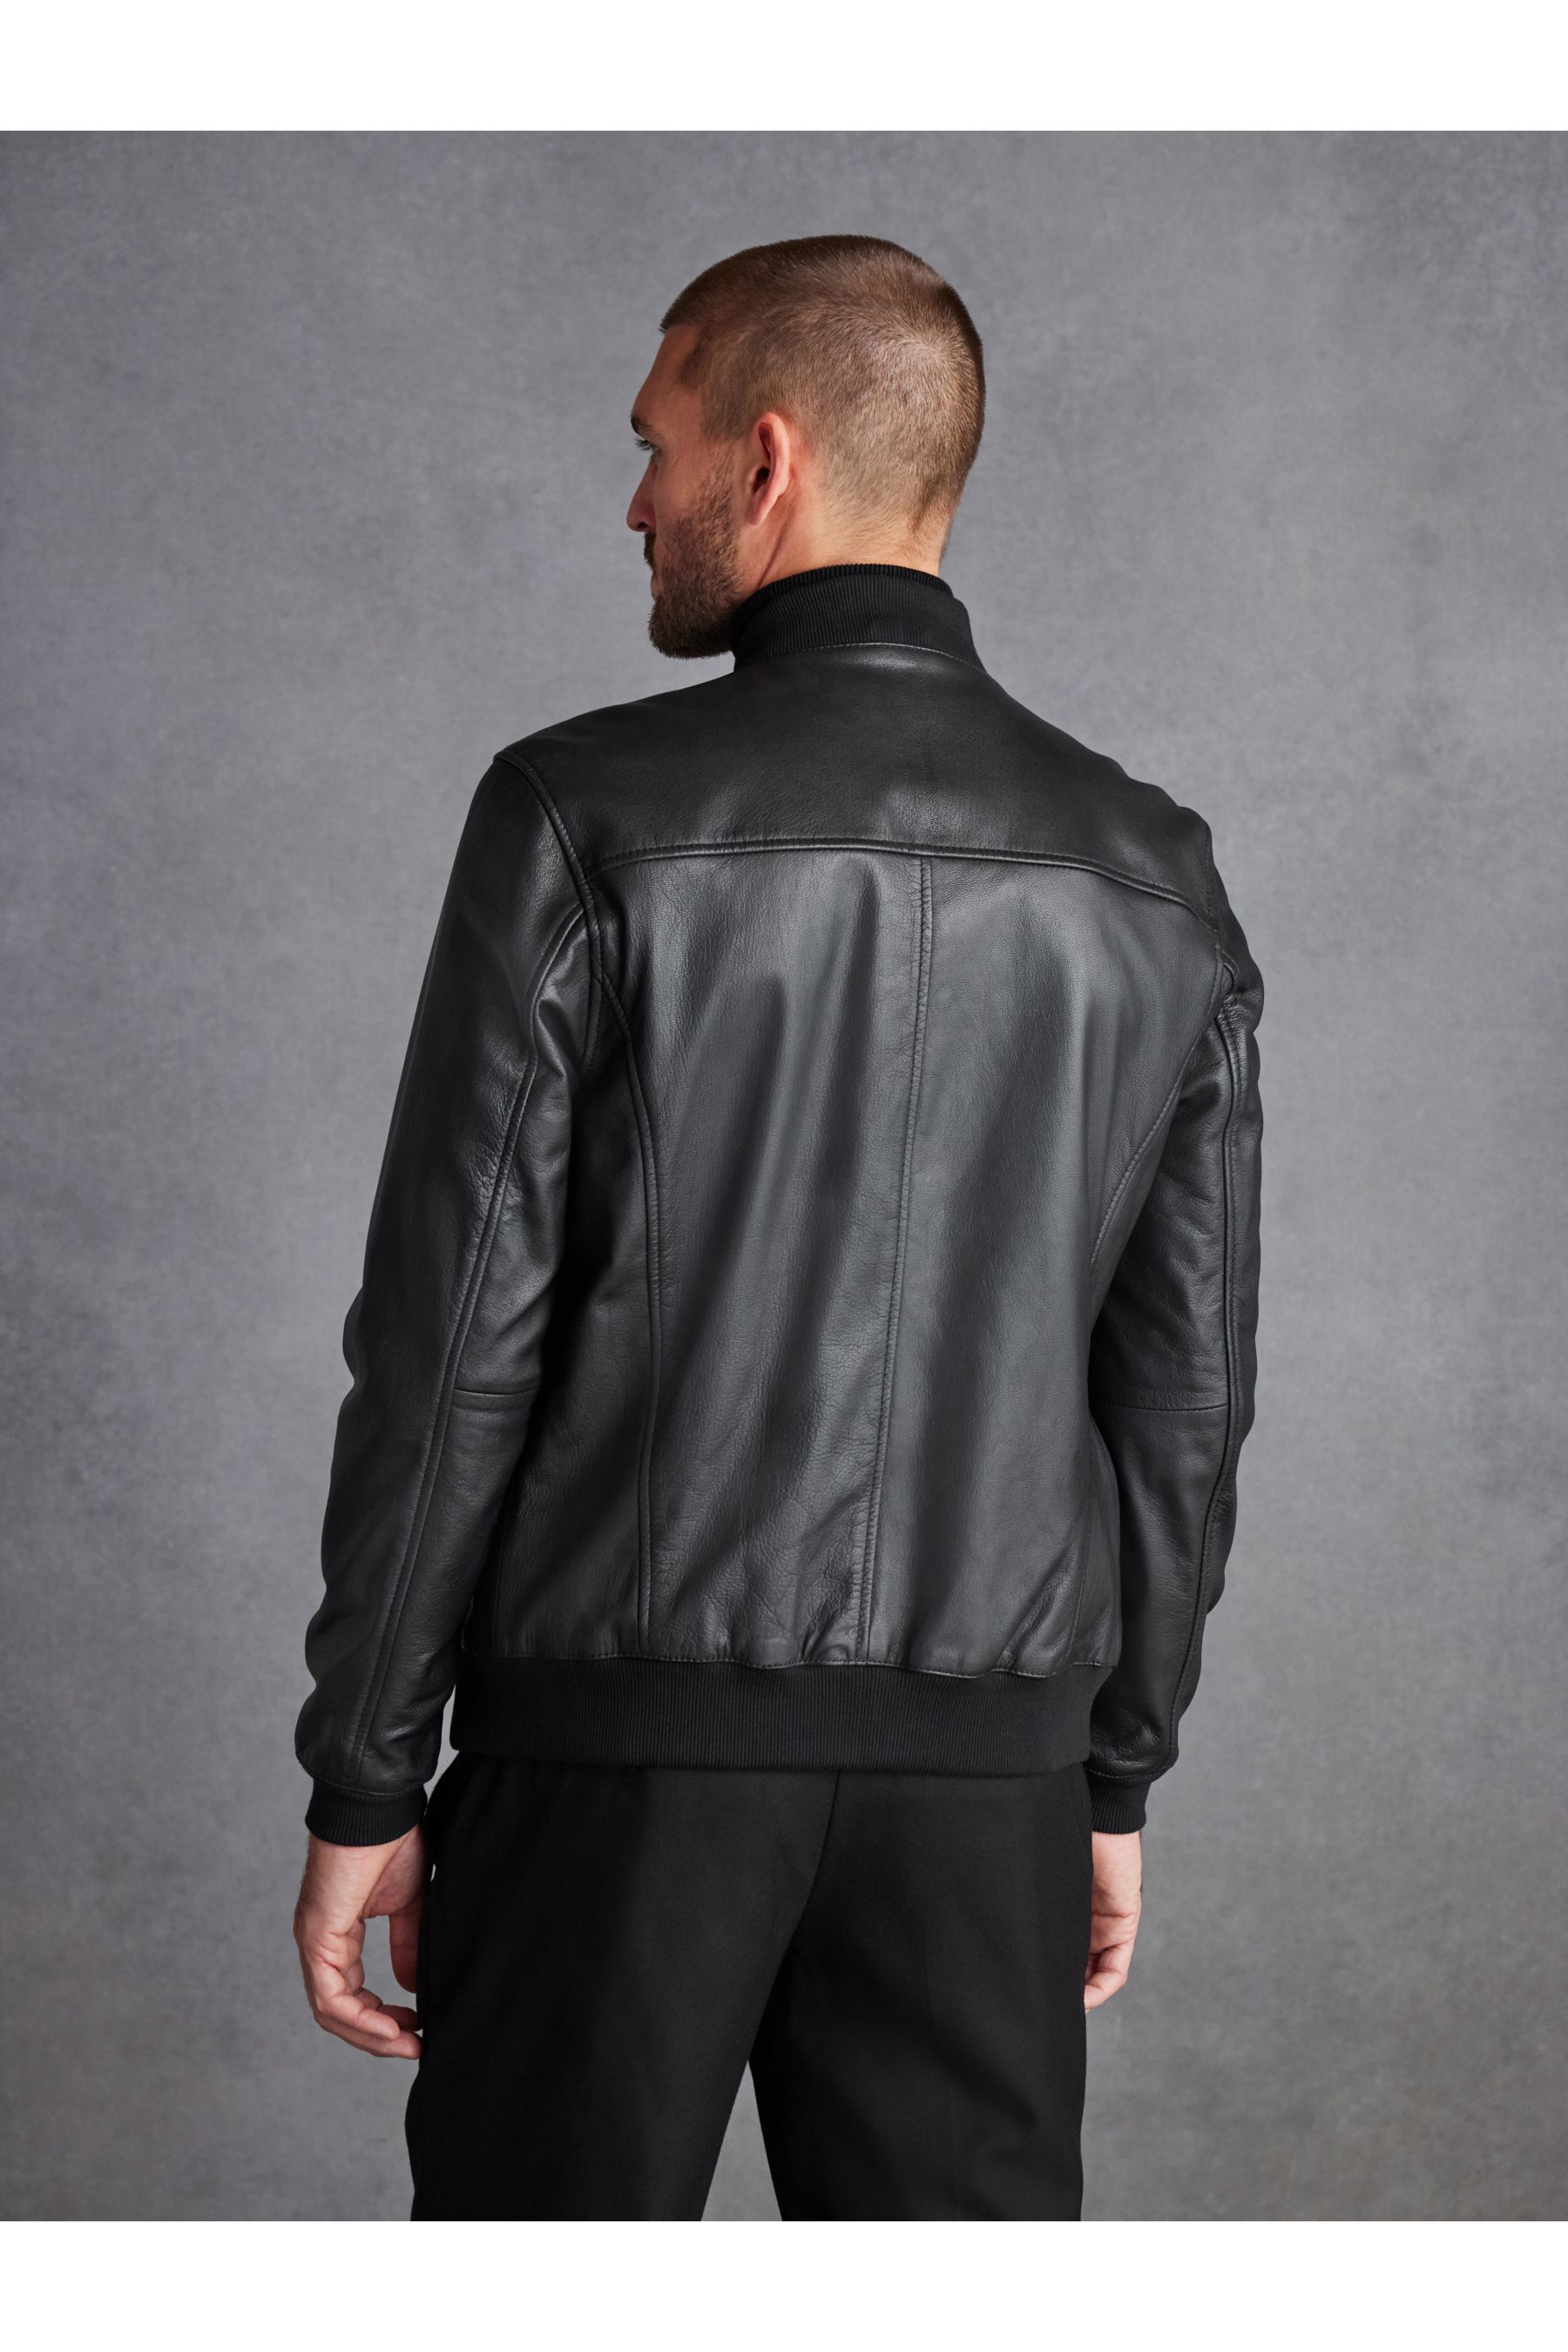 Buy Black Signature Leather Bomber Jacket from the Next UK online shop